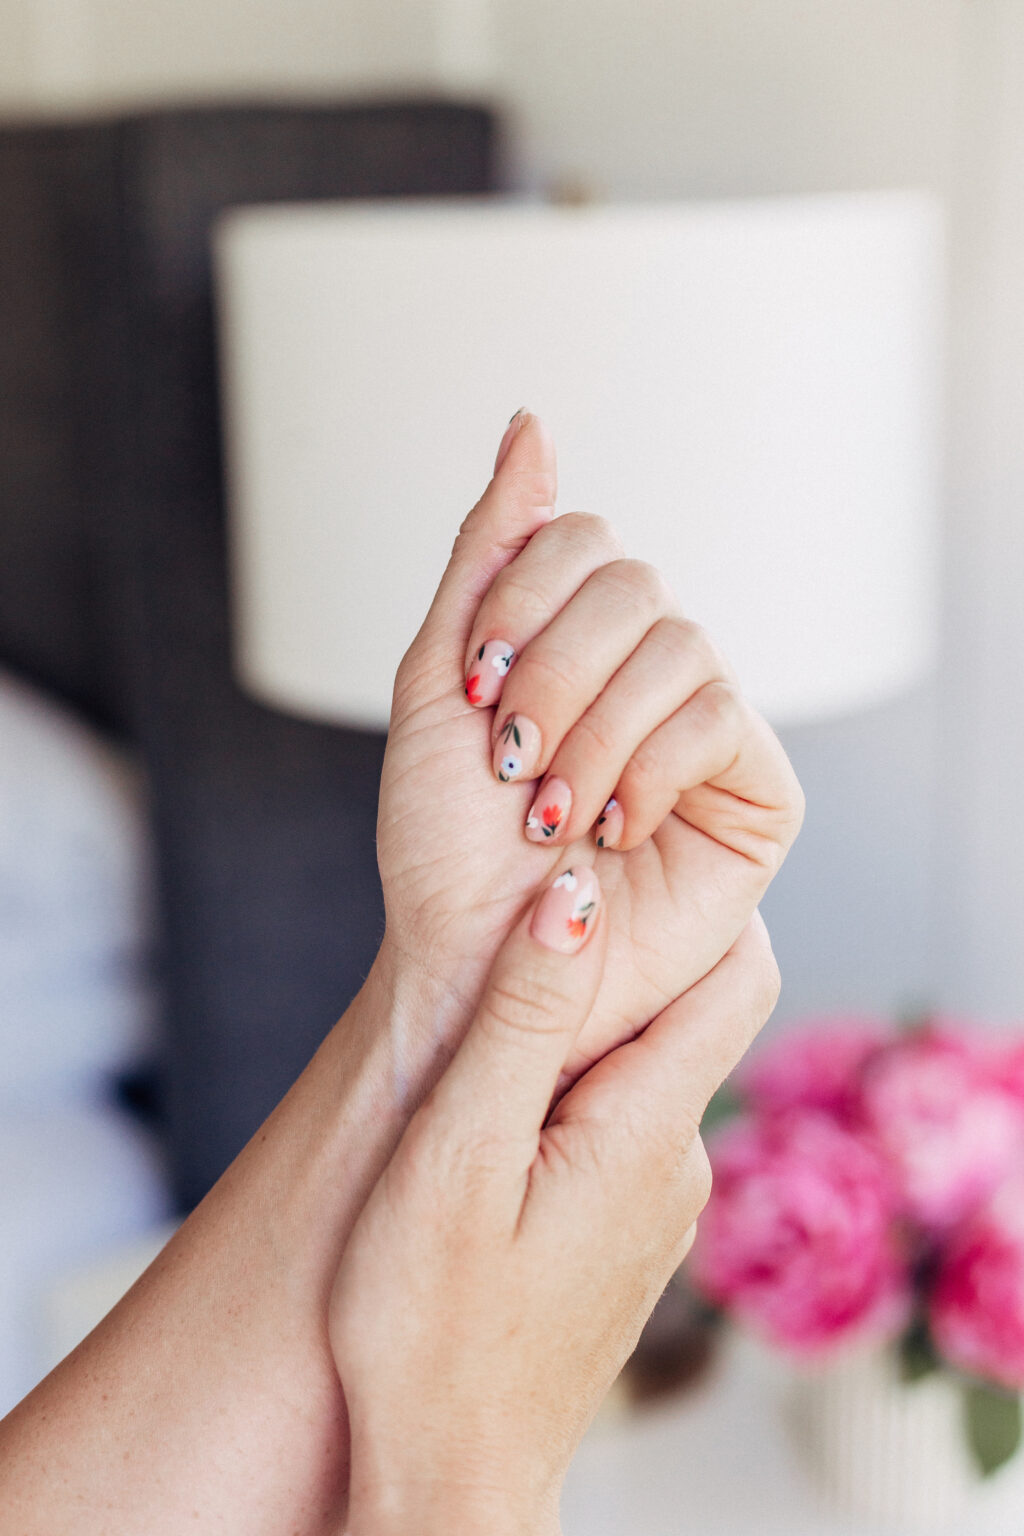 DIY Floral gel nail tutorial that is easy and so fun! 